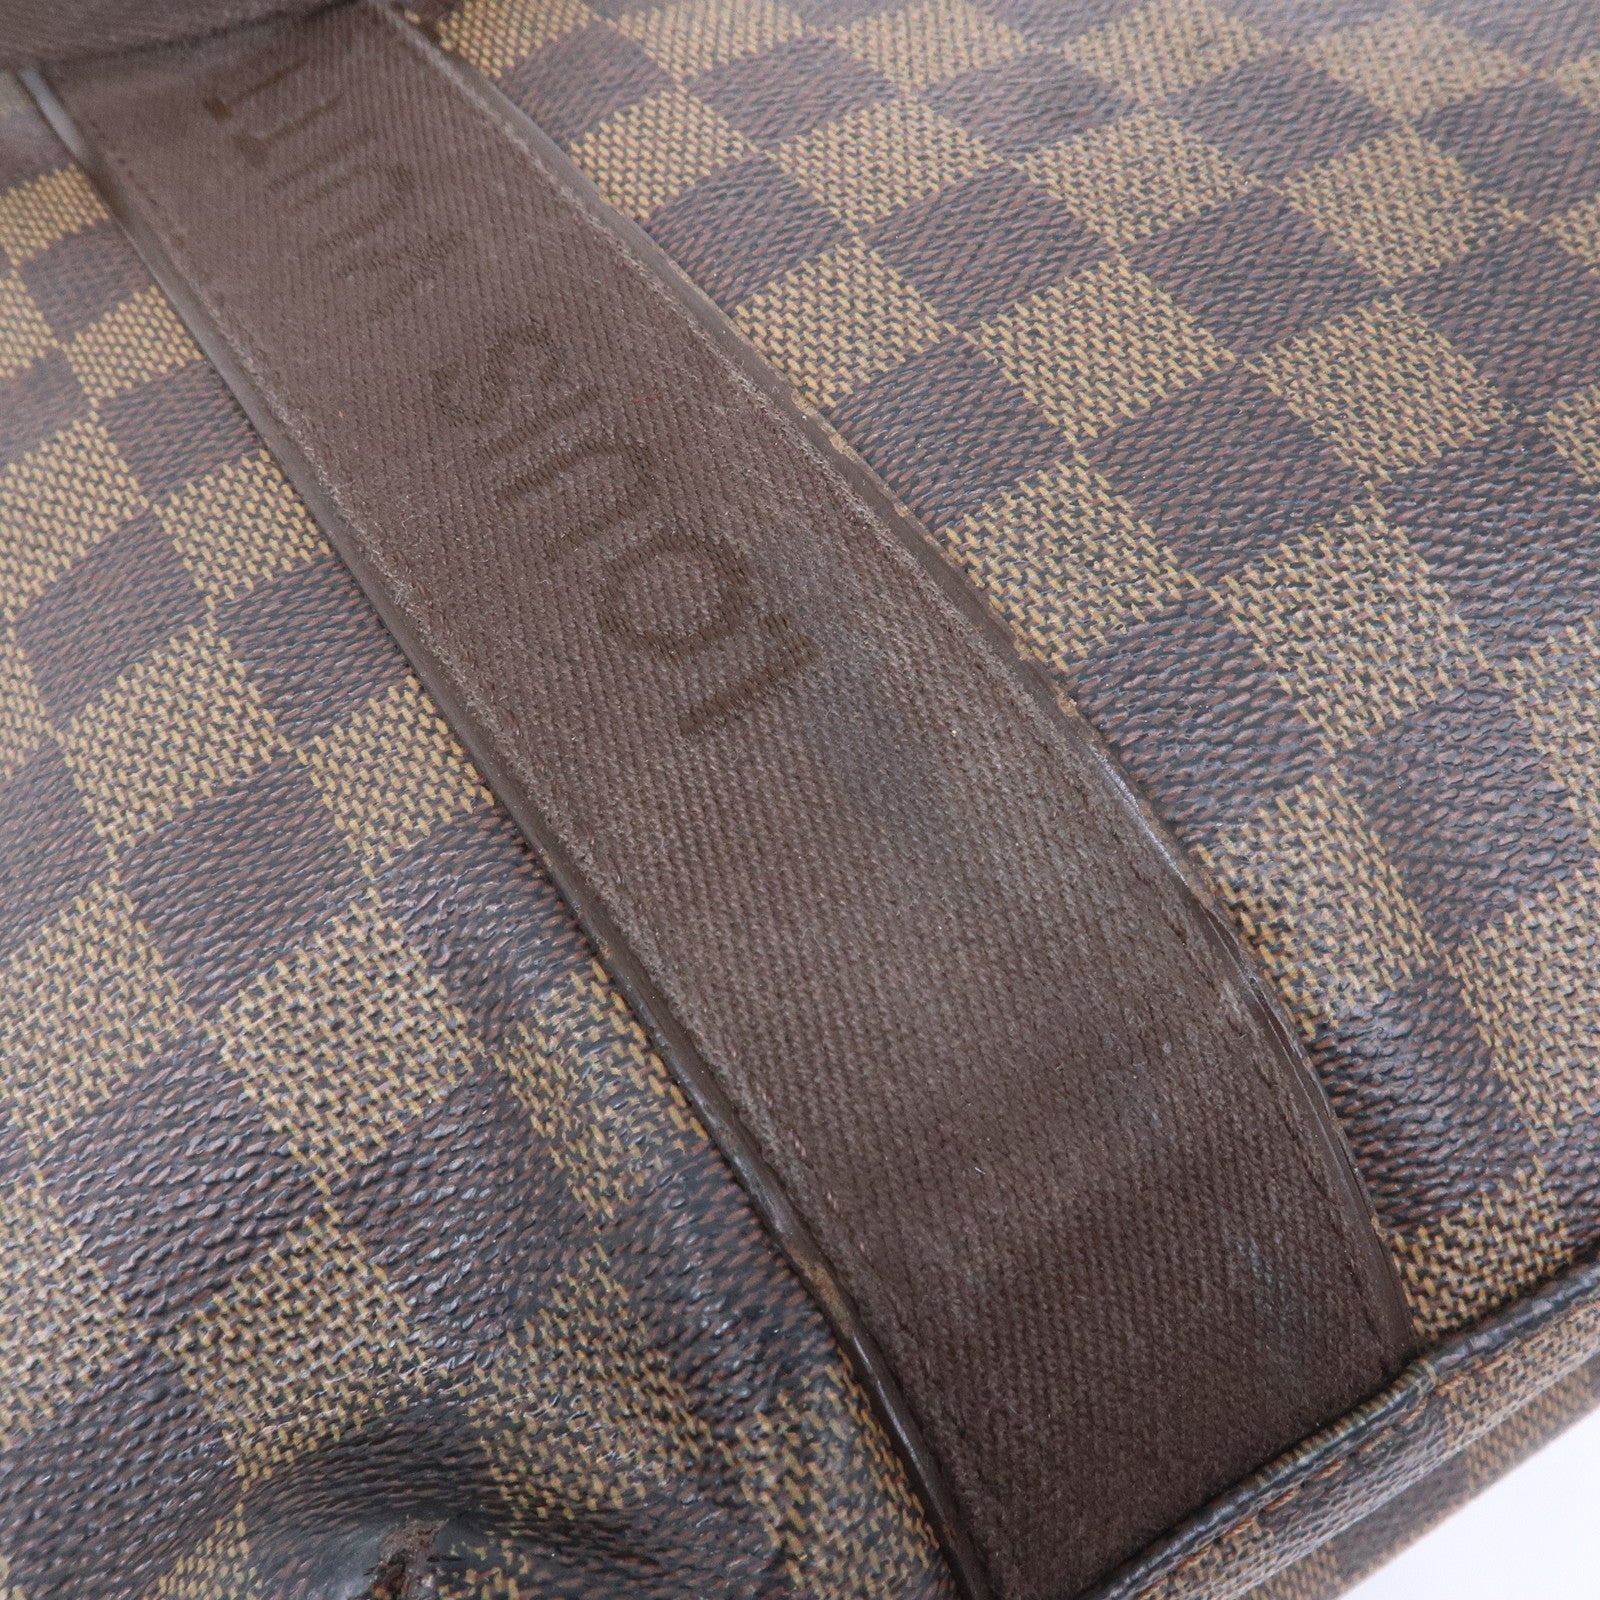 ep_vintage luxury Store - Blue - Bag - Plaid - Leather - Label